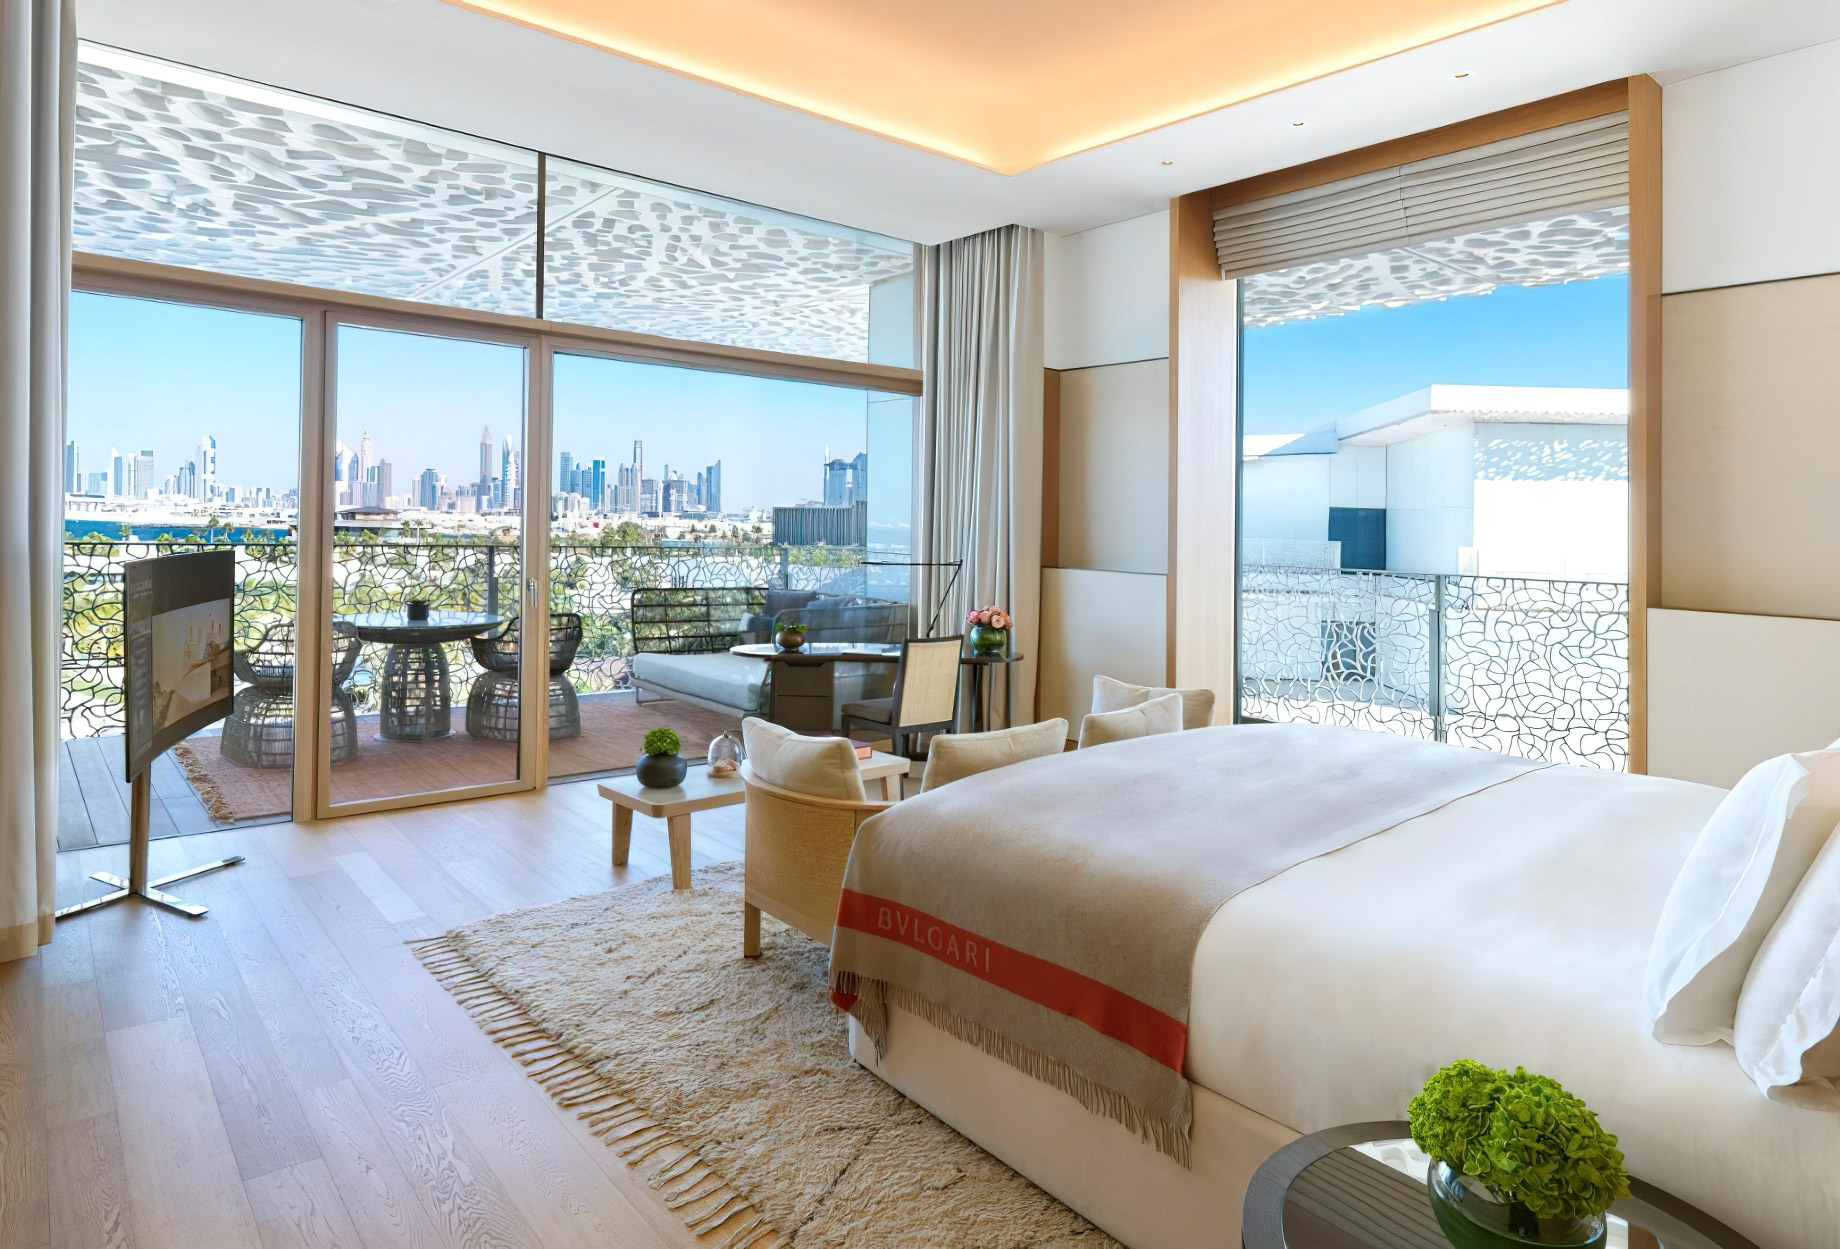 Bvlgari Resort Dubai – Jumeira Bay Island, Dubai, UAE – Guest Suite Bedroom